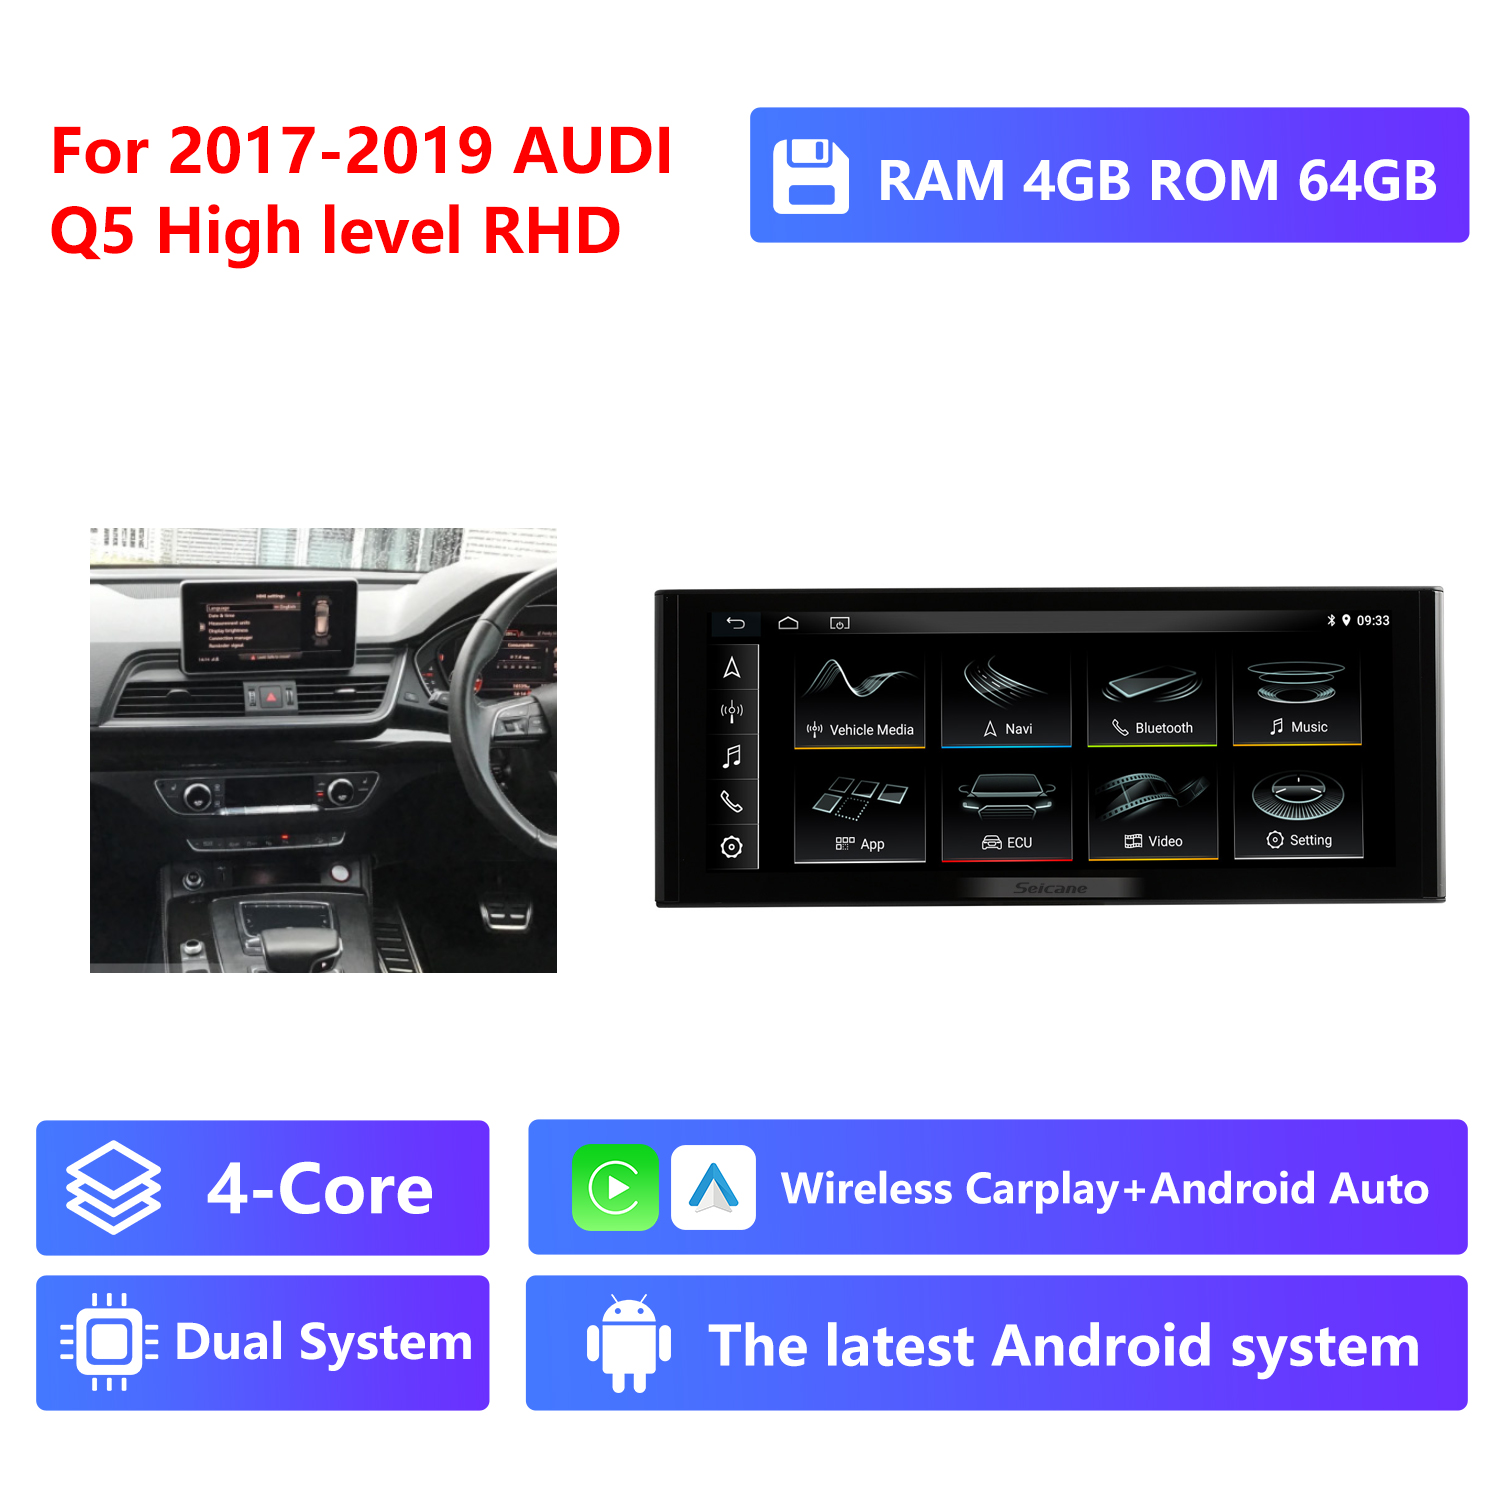 4-Core RAM 4G ROM 64G,2017-2019,High version,RHD